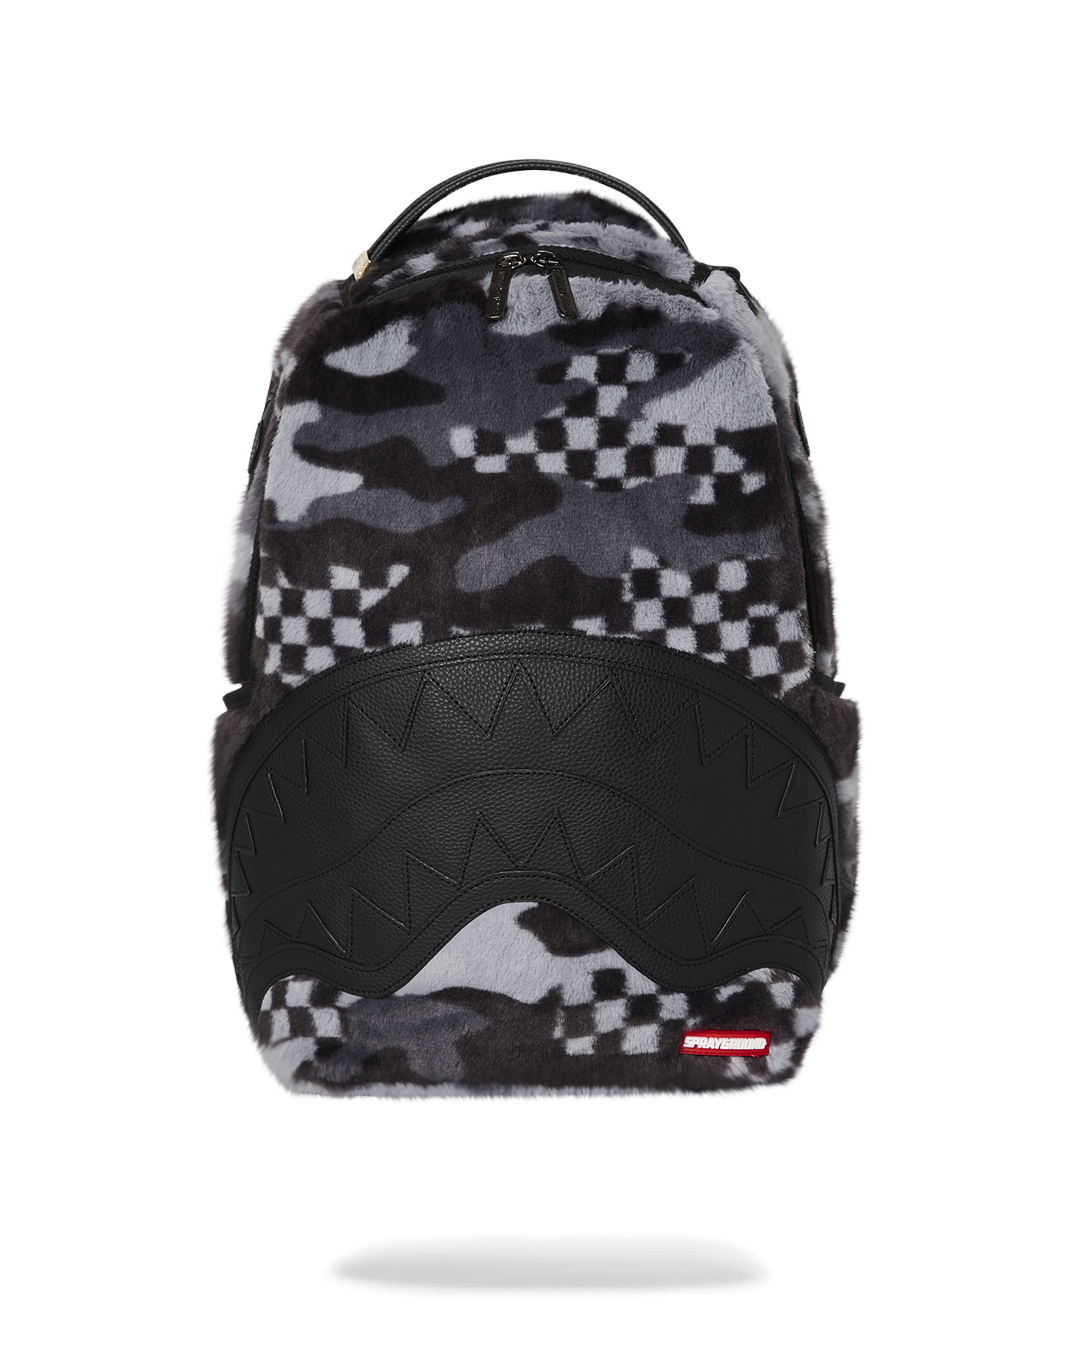 NEW Sprayground 3AM Black Camo Money Bear Backpack Limited Edition